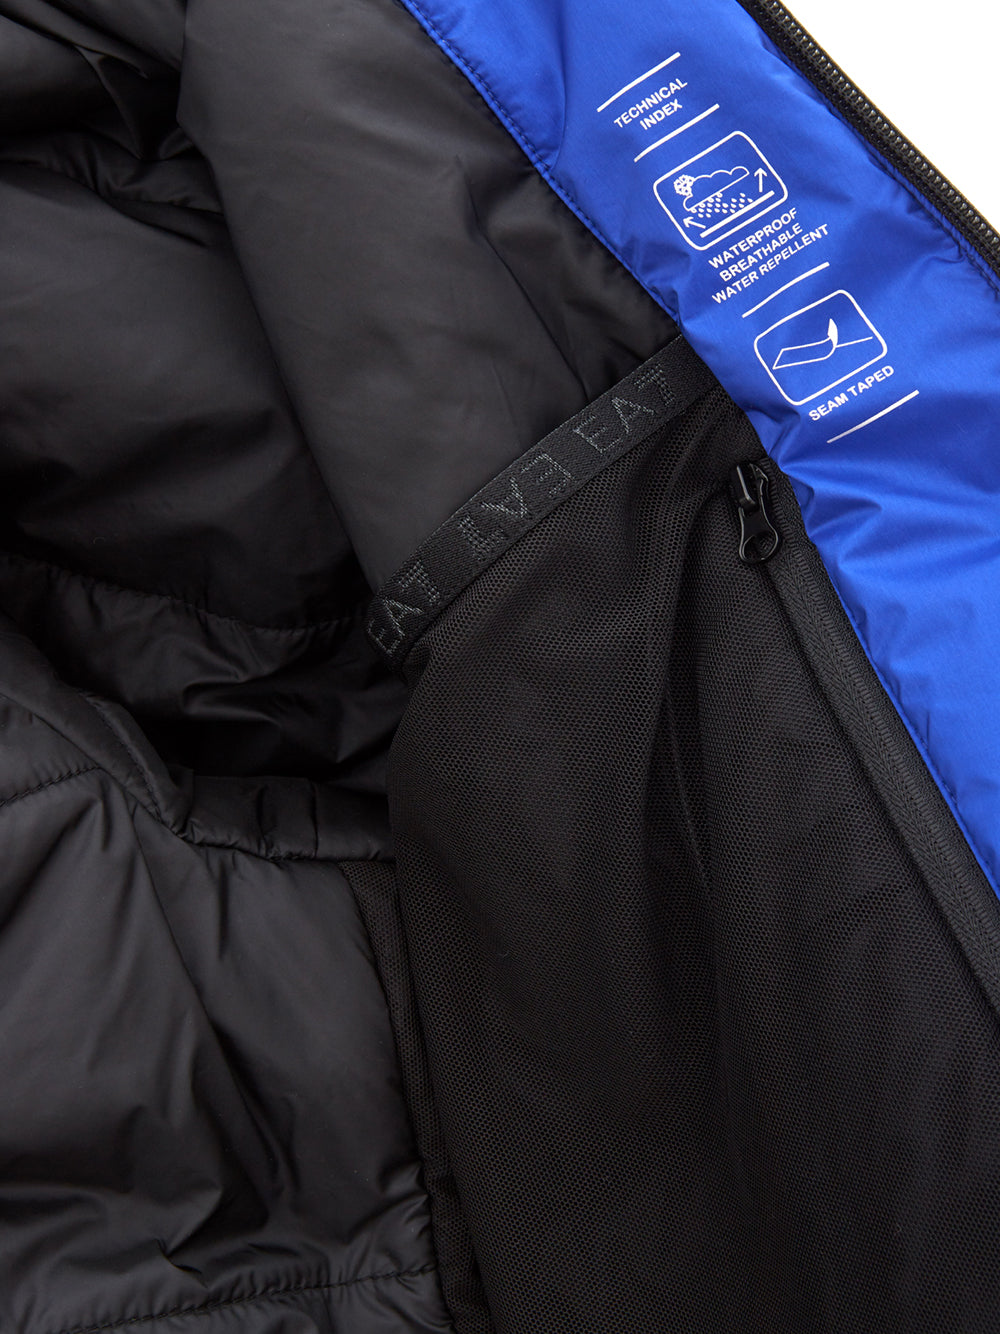 Bicolor Blue/Black Winter Technical Jacket